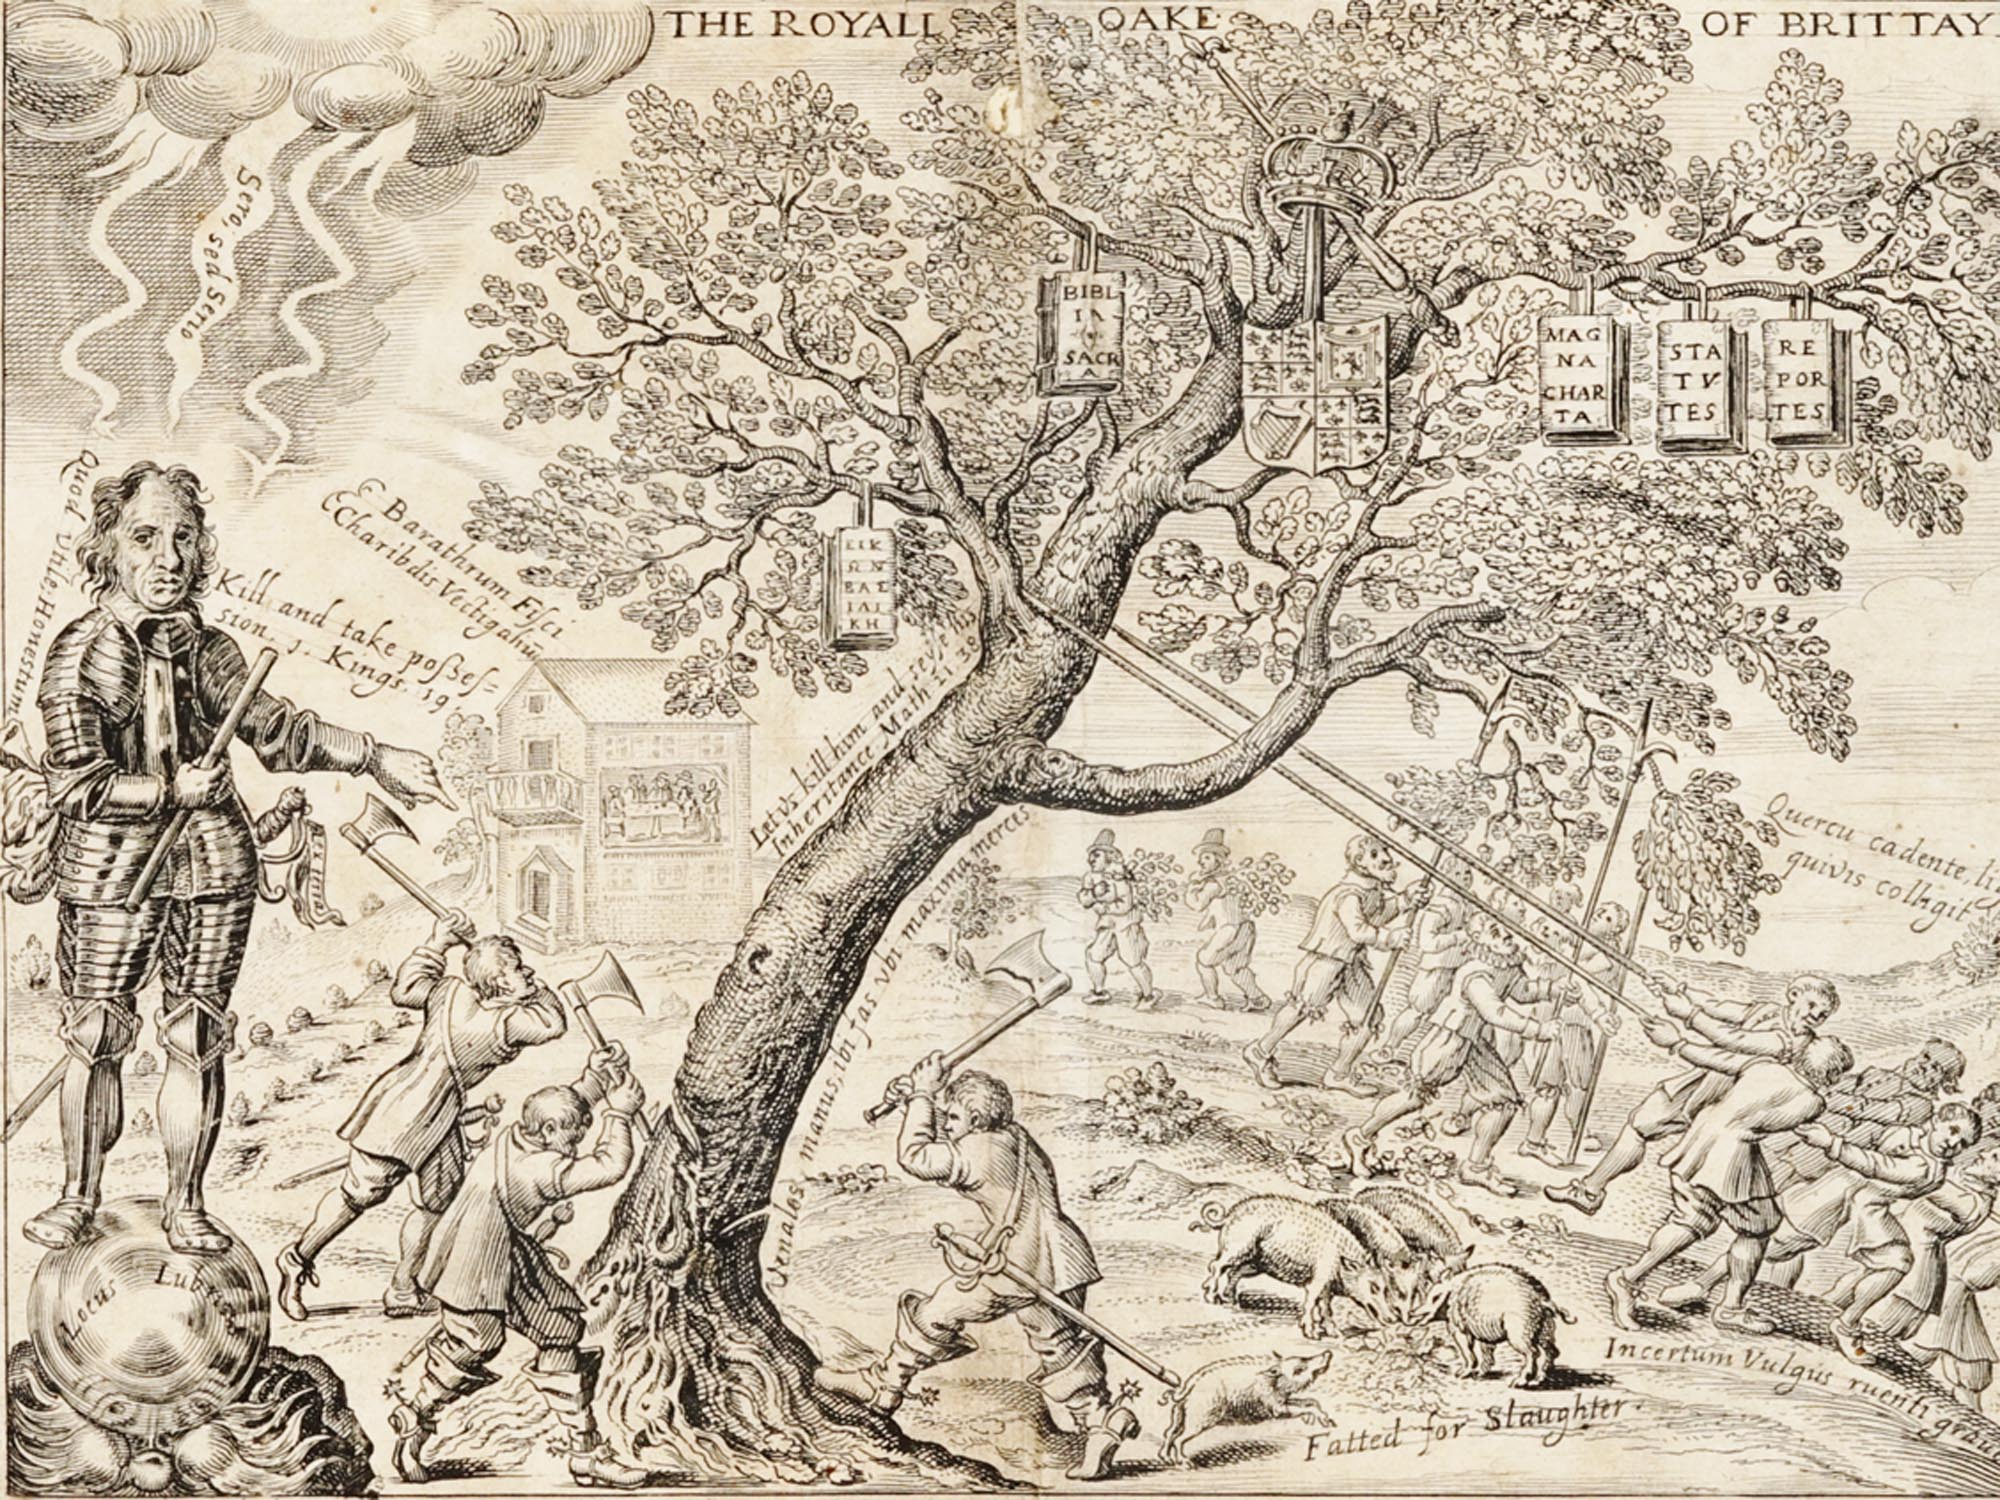 1649 BRITISH ETCHING ROYALL OAKE OF BRITTAYNE PIC-1